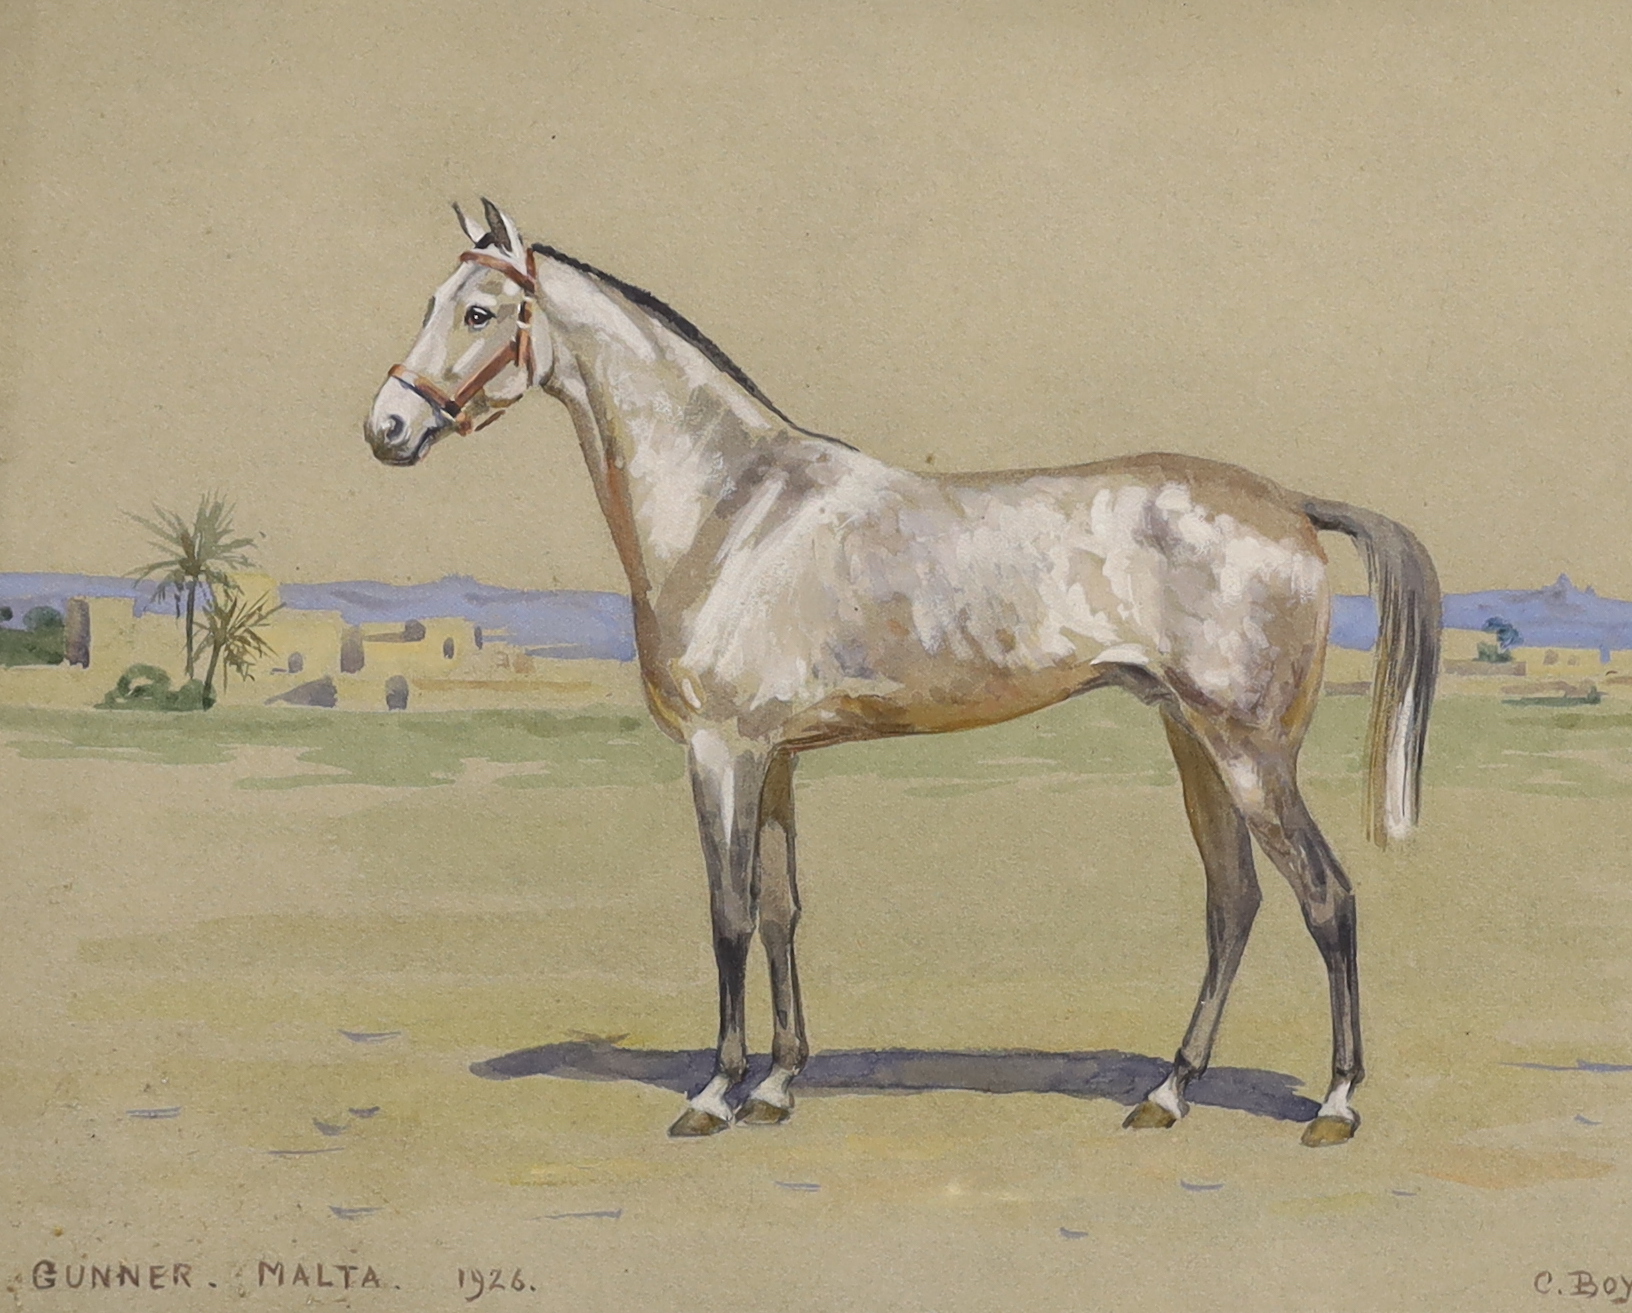 Cerise Boyle (b.1875), equestrian interest heightened watercolour on card, ‘Gunner, Malta, 1926’, signed, mounted, 23 x 29cm, unframed